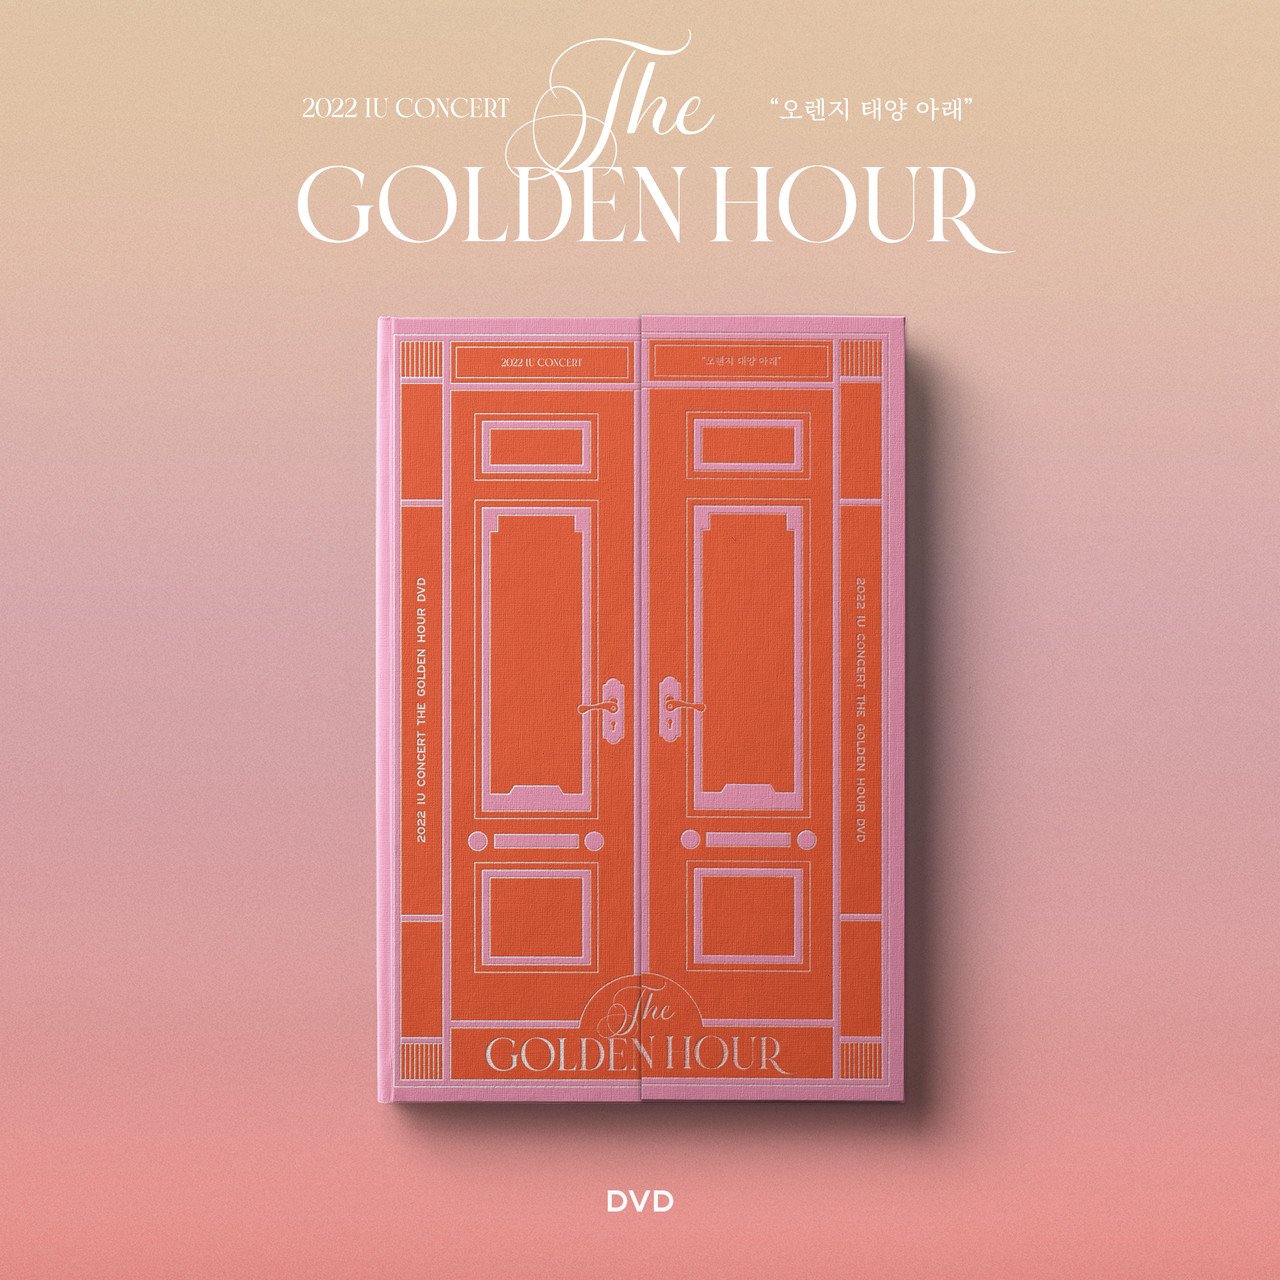 CD Shop - IU 2022 IU CONCERT : THE GOLDEN HOUR